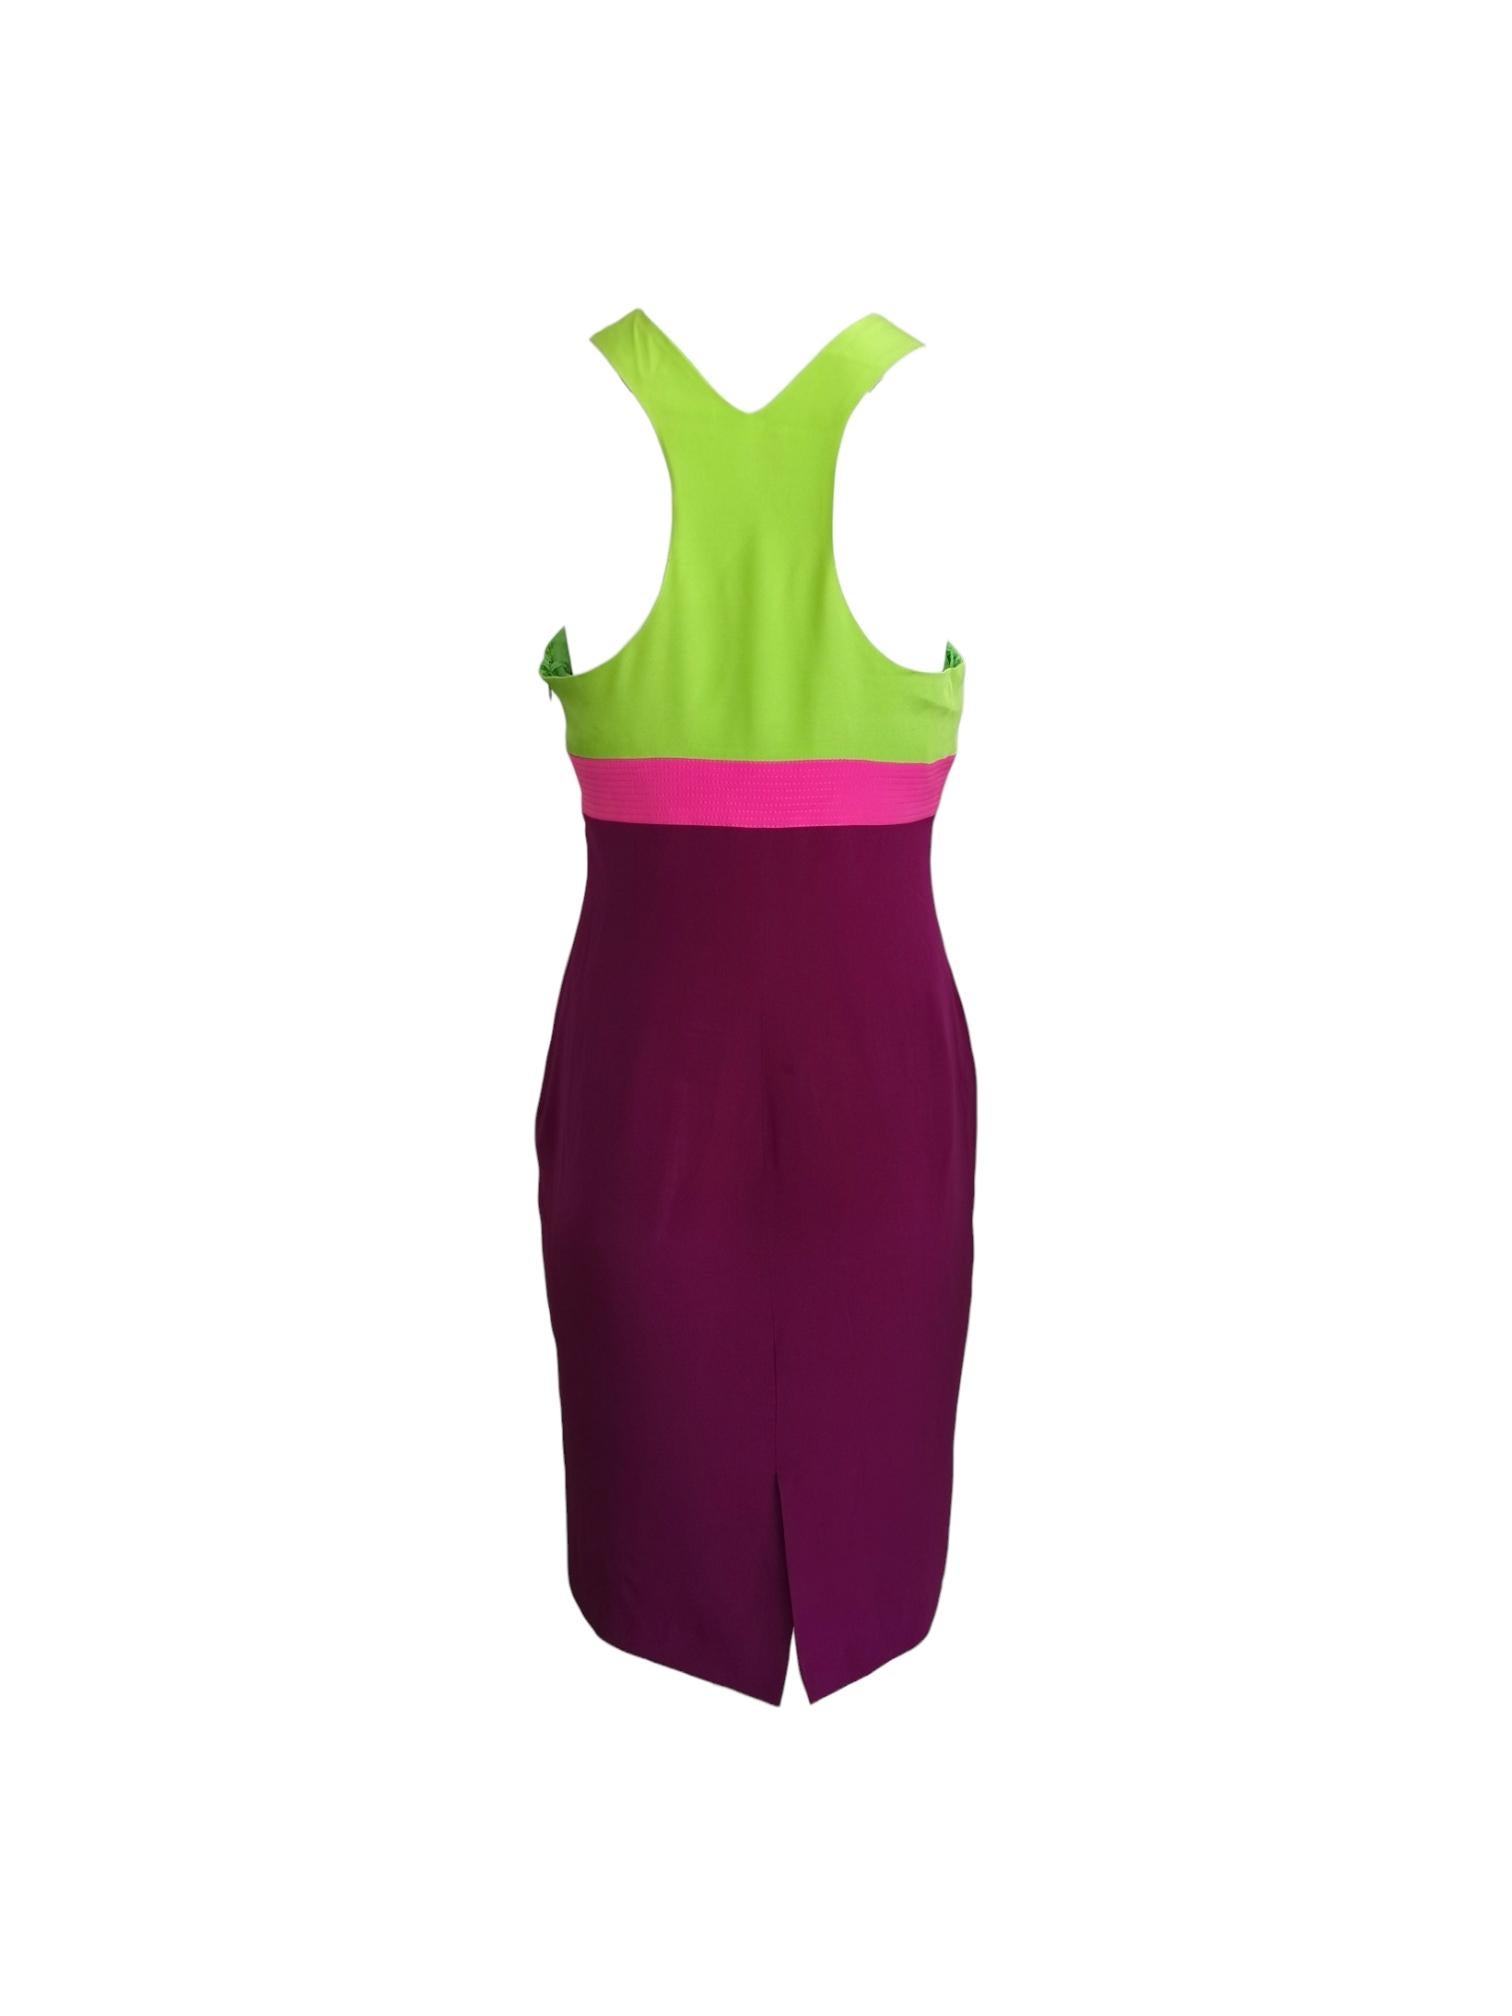 Versace SS 2003 colour block dress 

Size: Italian 42

Material: 100% silk

Condition: Very Good